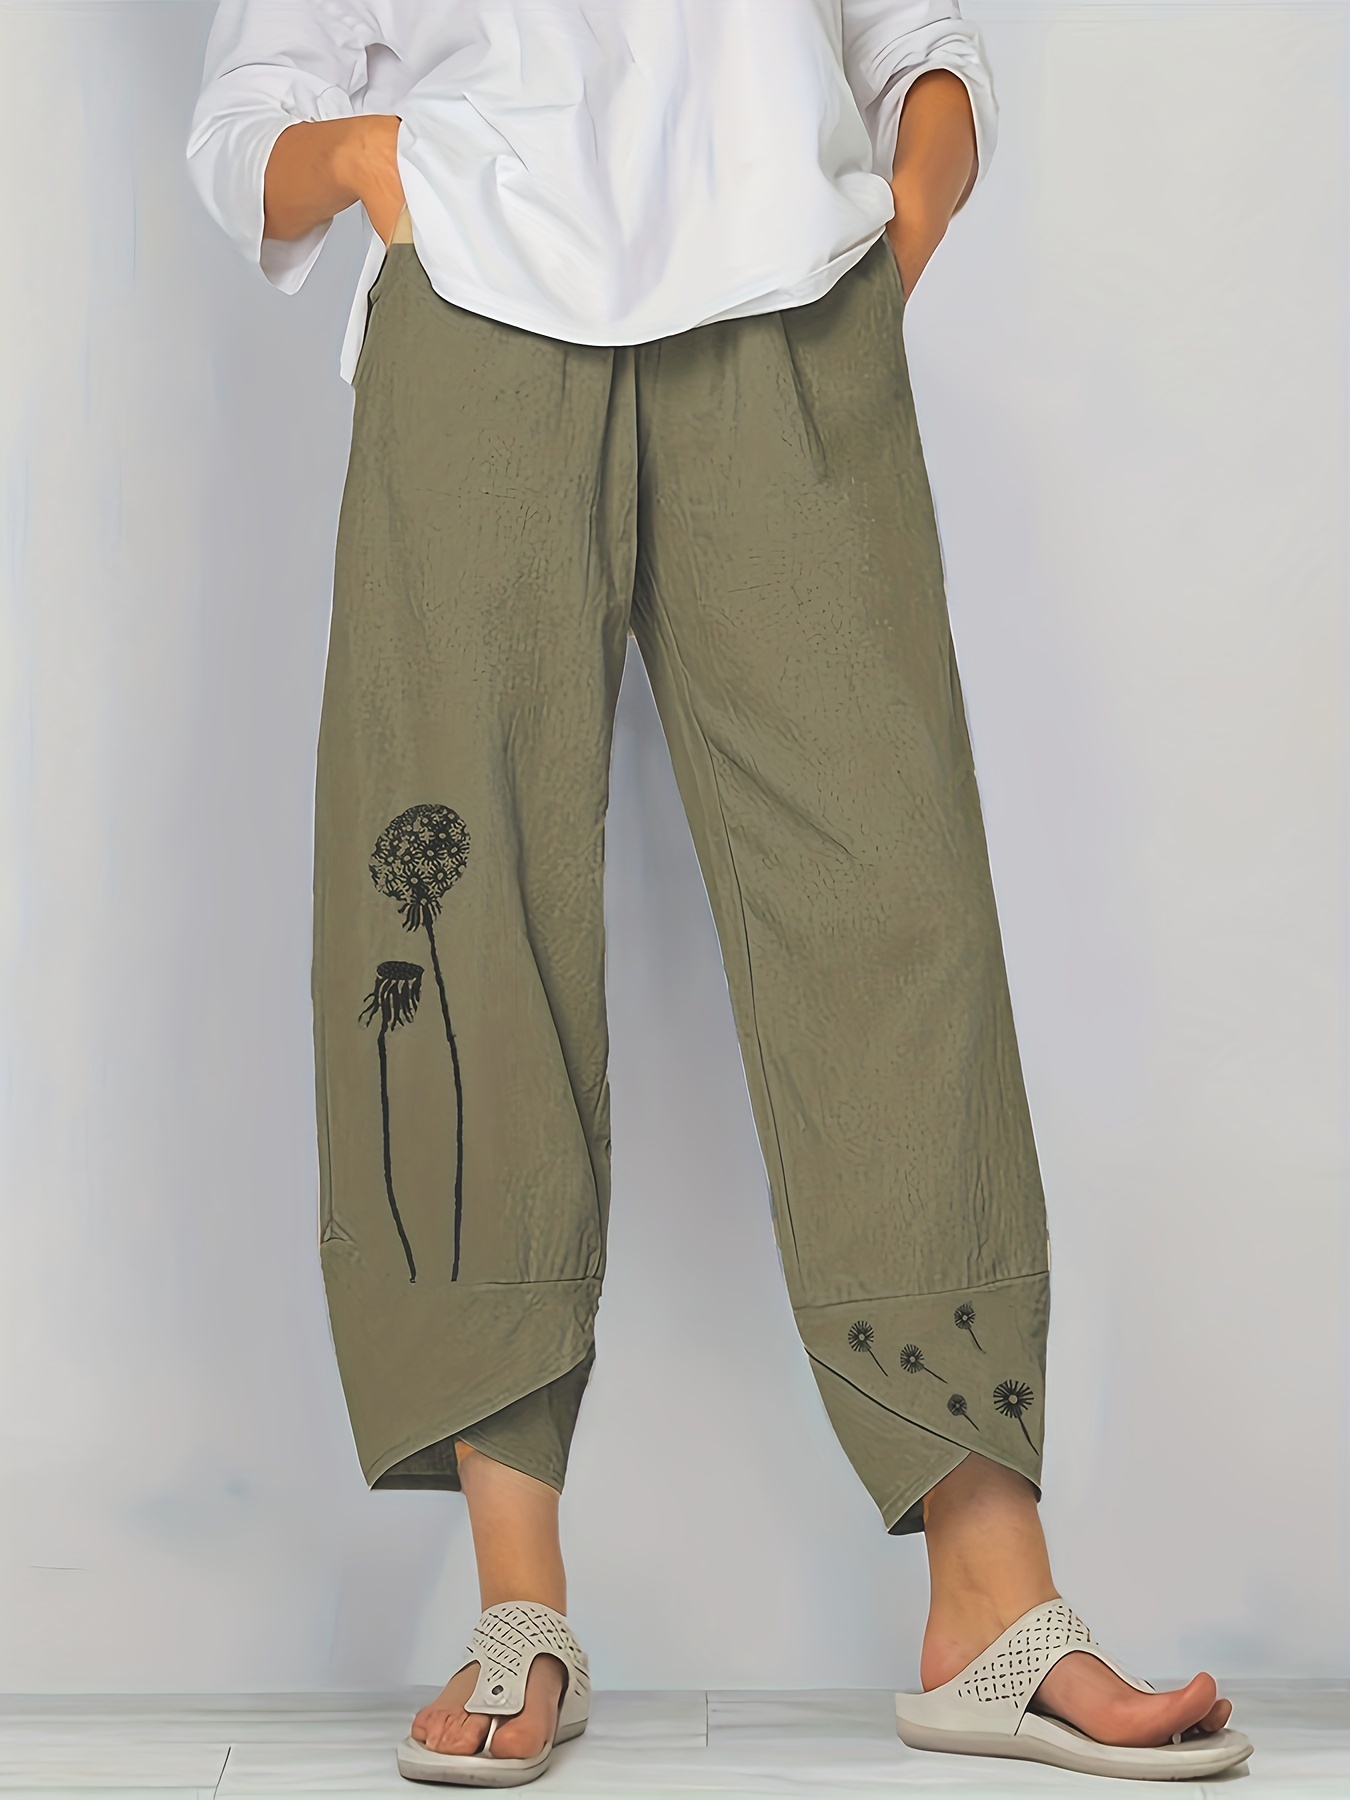 CZHJS Women's Dandelion Pattern Solid Color Cotton Linen Pants Summer  Trousers Casual Loose Flowy Wide Leg Petal Split Cropped Pants with Pockets